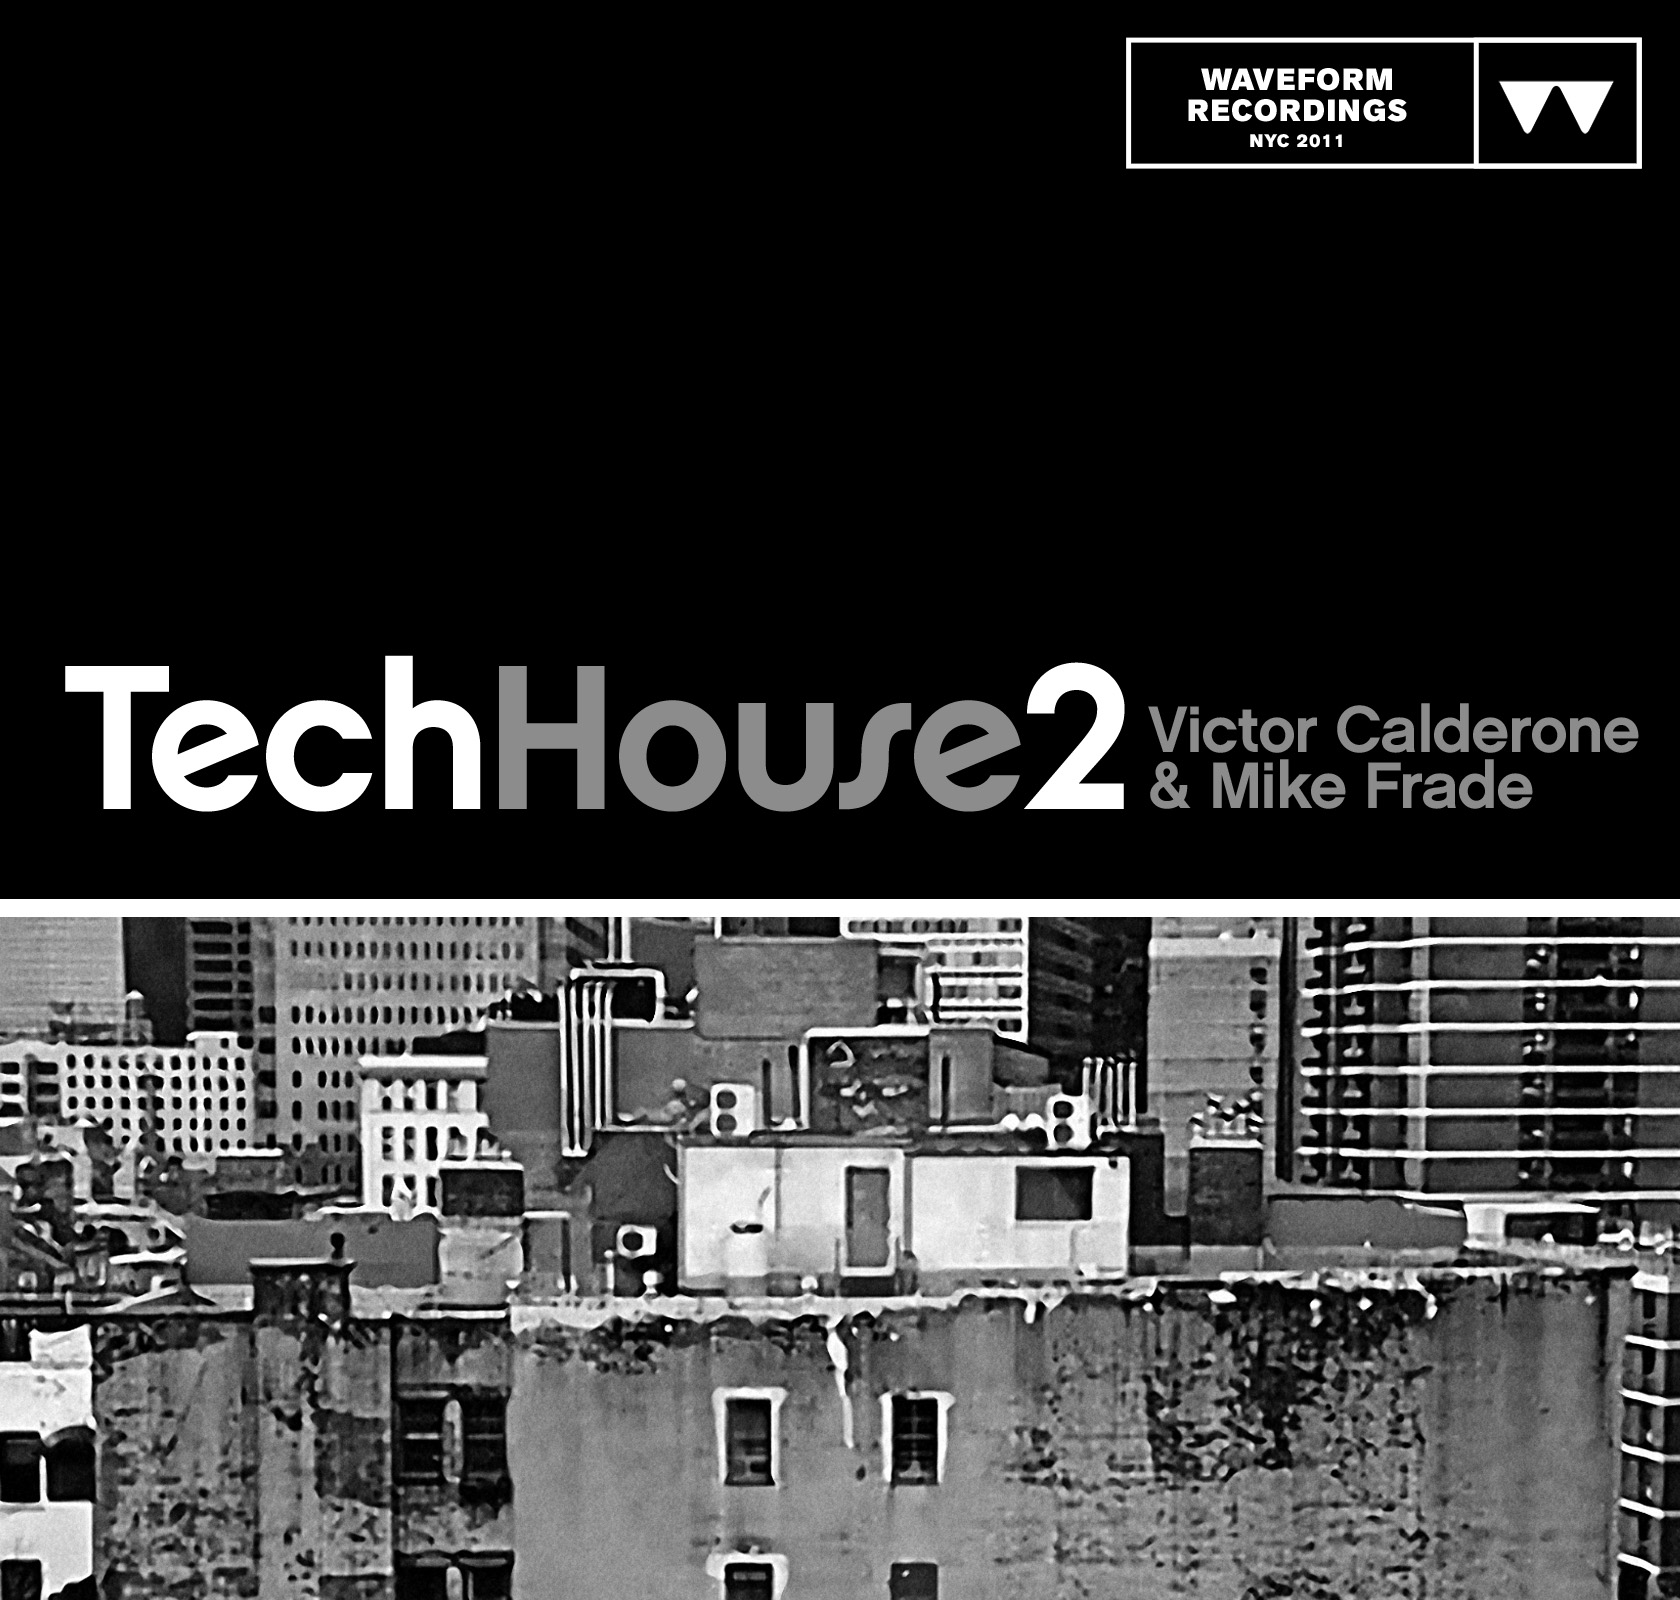 Waveform Recordings - Victor Calderone & Mike Frade - Tech House 2